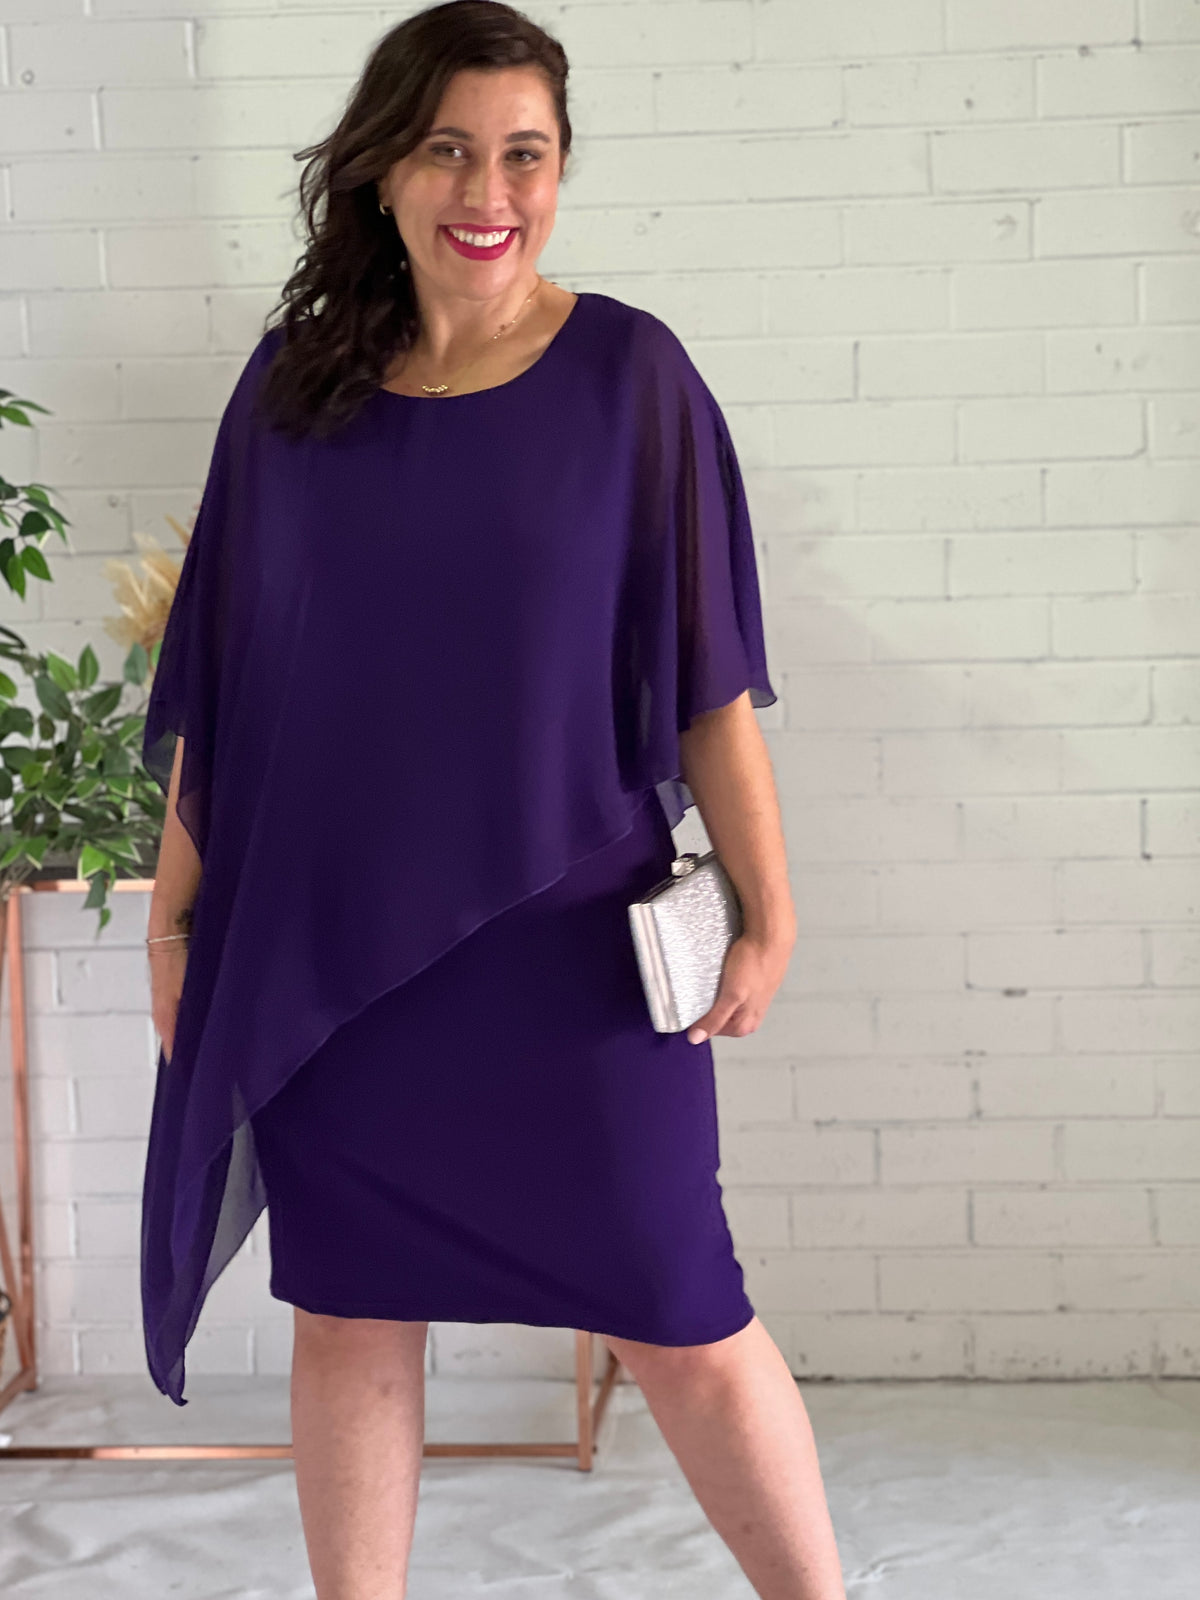 Renta Purple Event Dress